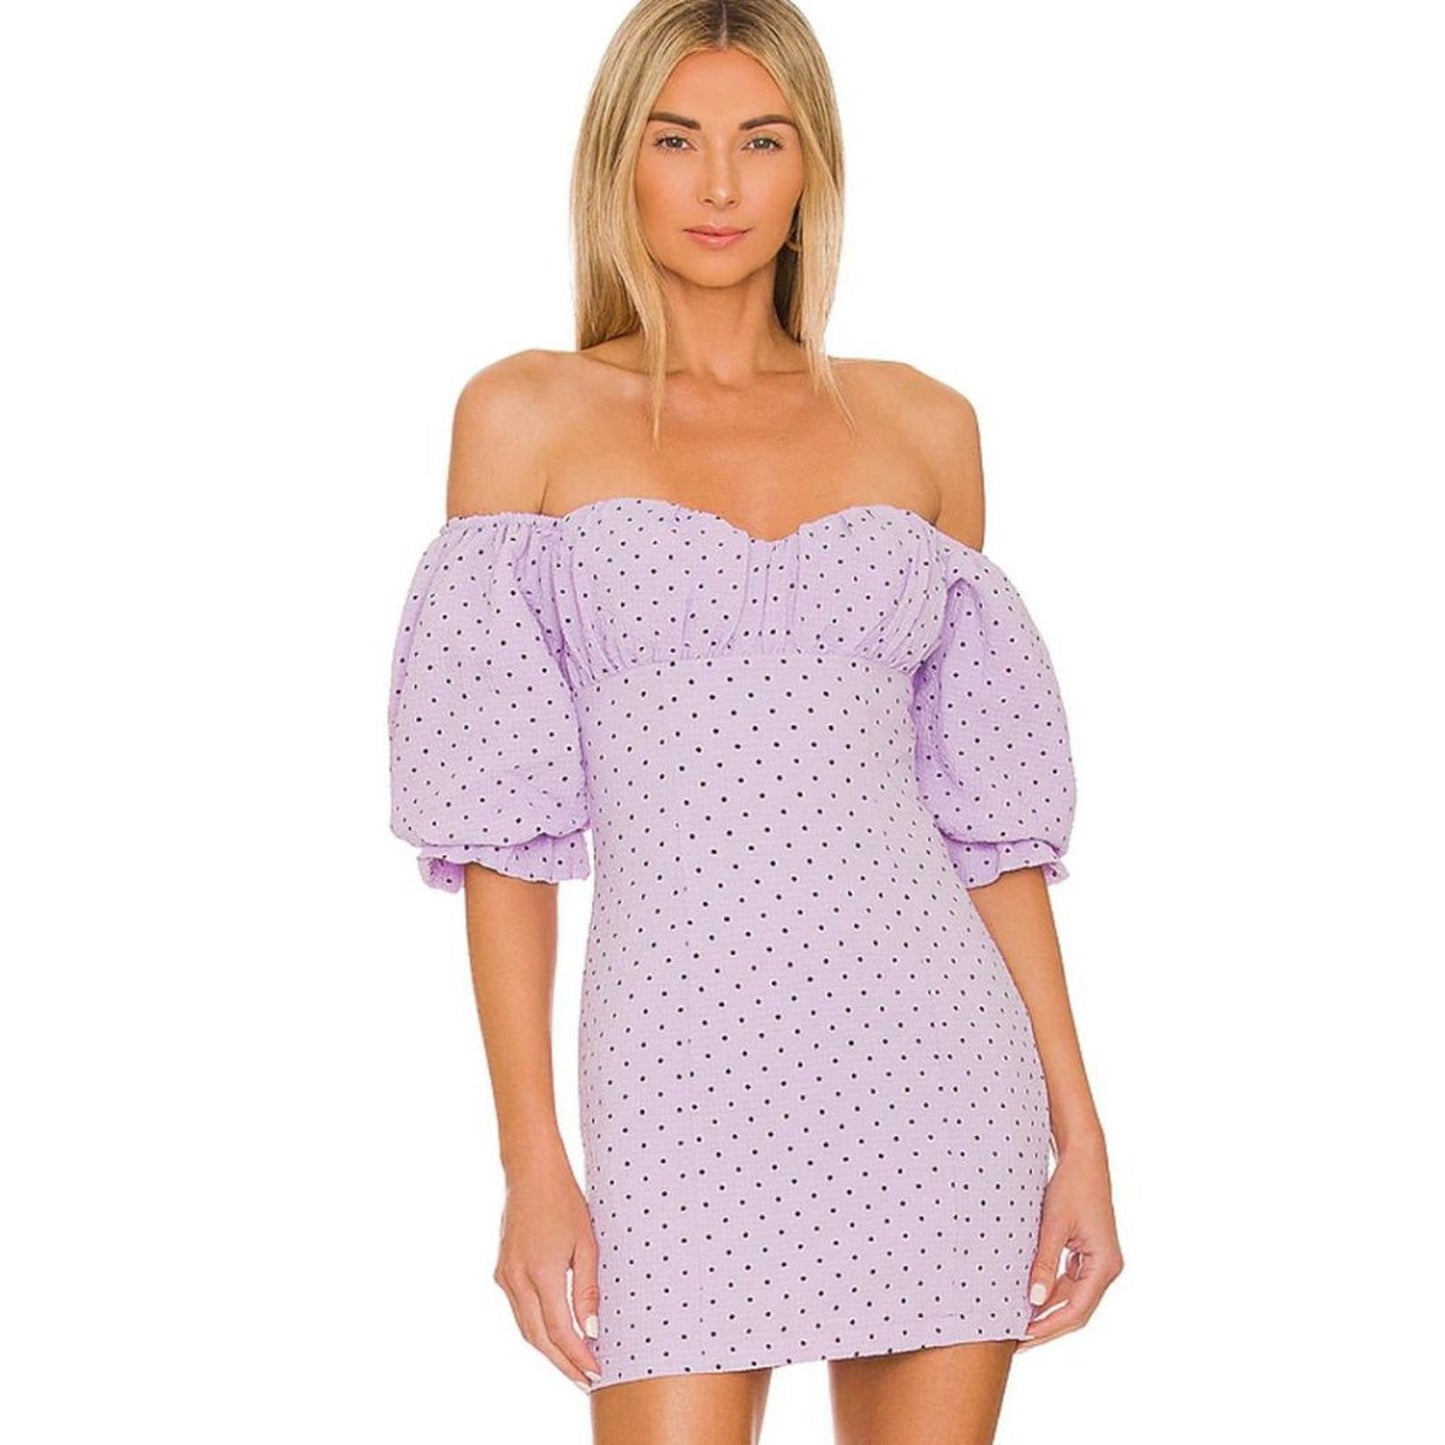 Majorelle Ashling Mini Dress in Lilac Dot NWOT Size XS